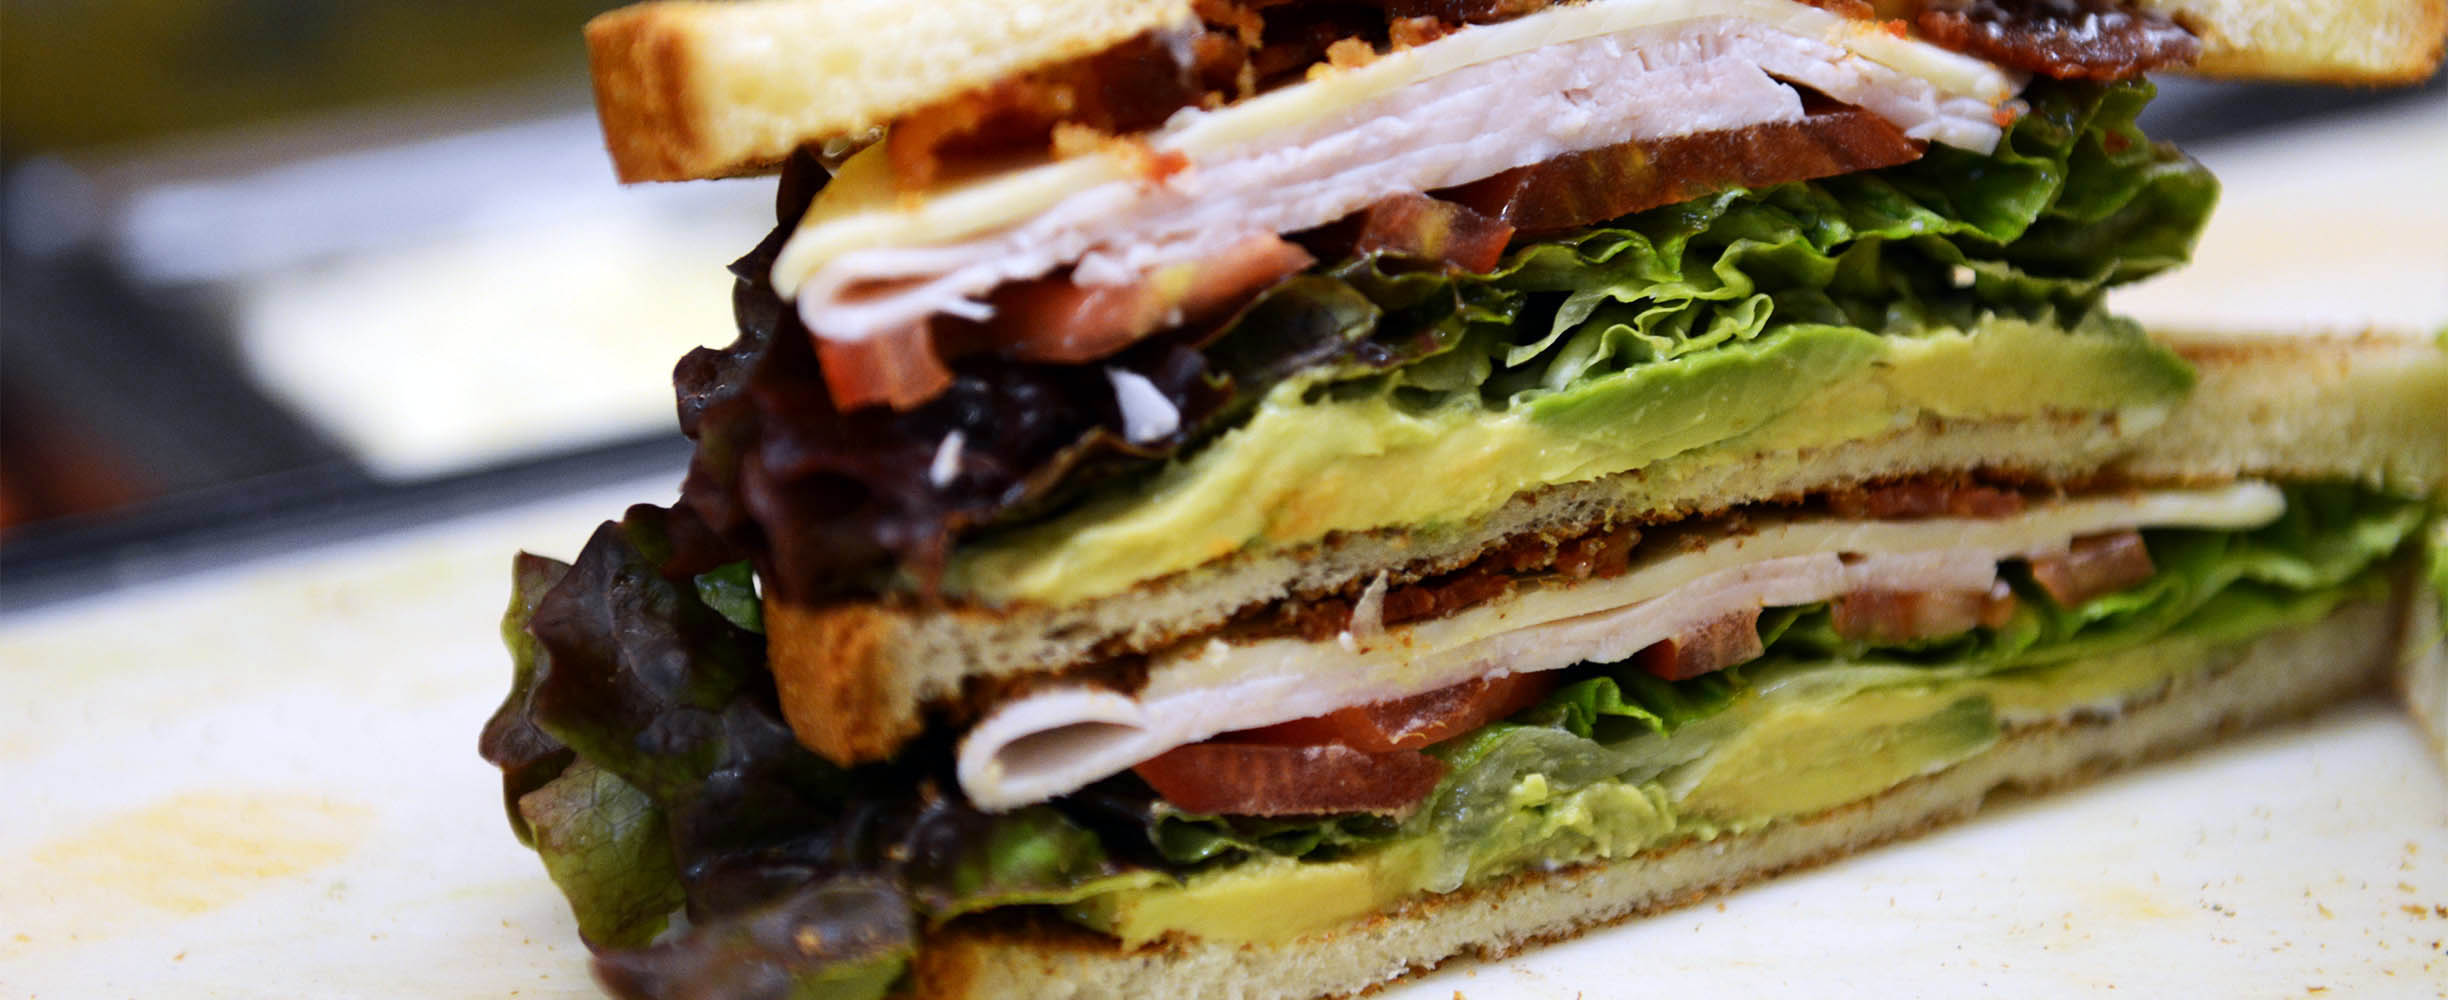 Turkey and avocado sandwich in Palo Alto